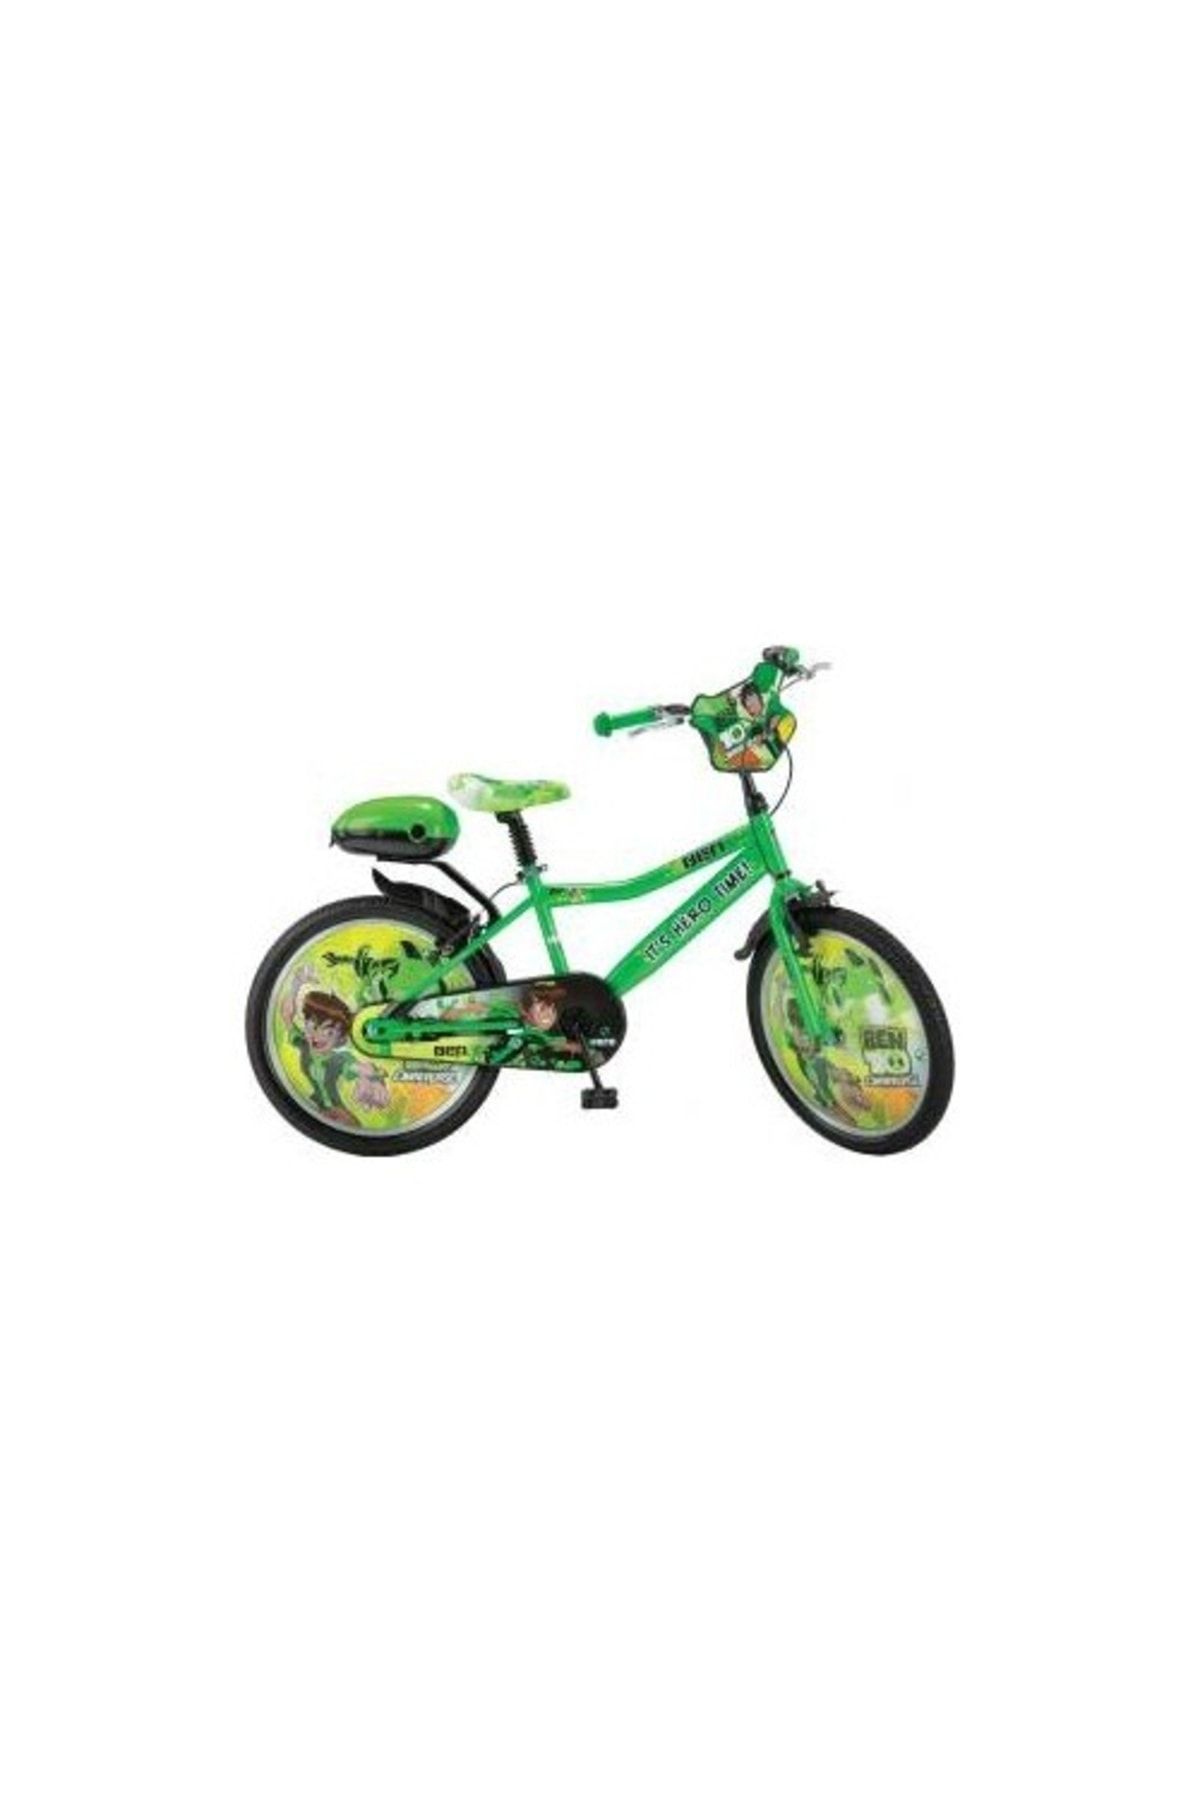 Ümit Bisiklet Ümit Ben 10 16 Jant Yeşil - Siyah 2016